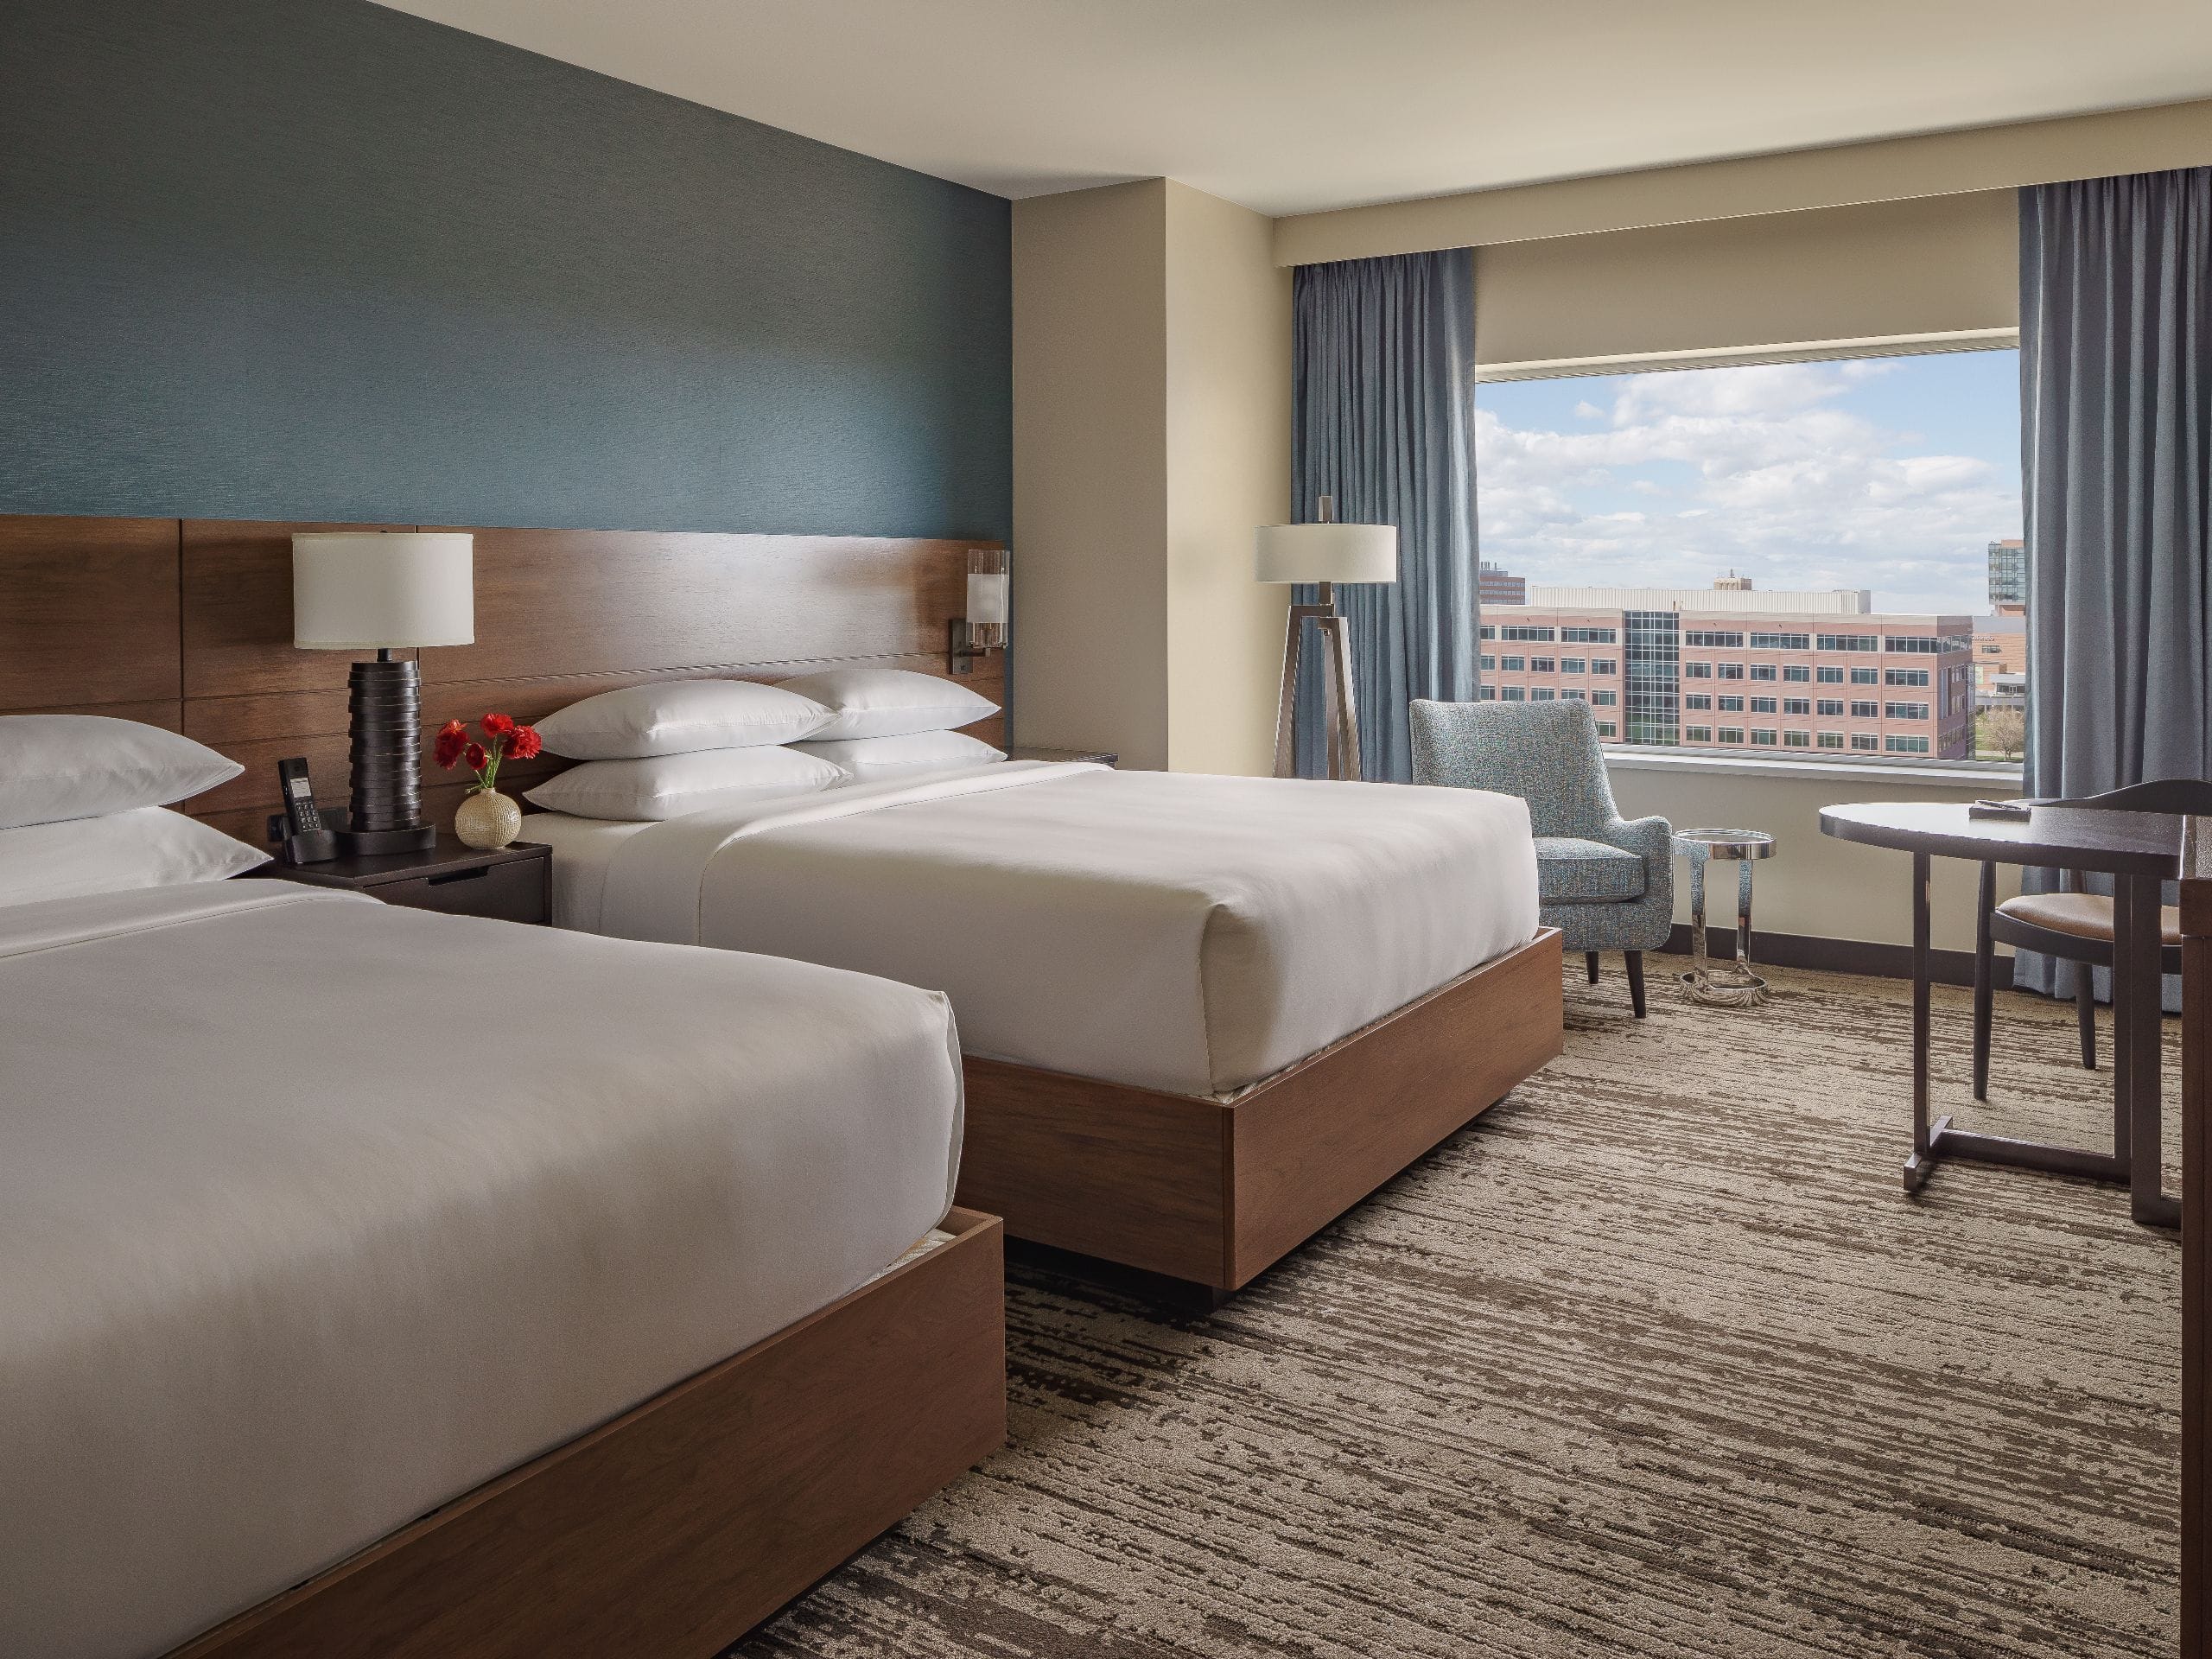 Aurora, CO hotel room with two queen beds at Hyatt Regency Aurora-Denver